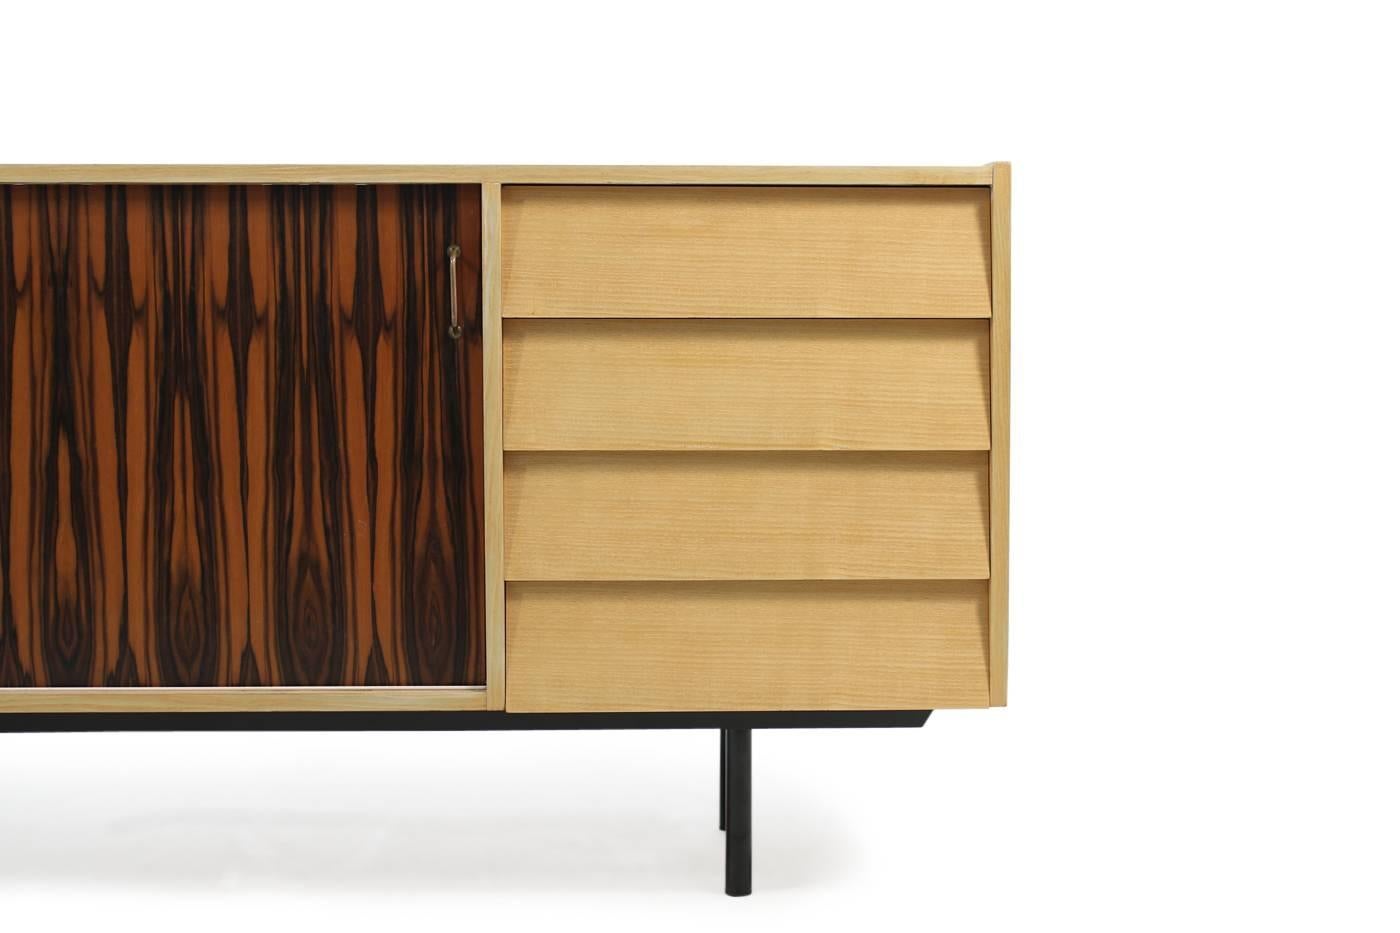 1950s Oak Sideboard Mid-Century Modern Design with Drawers Brass Handles In Good Condition For Sale In Hamminkeln, DE